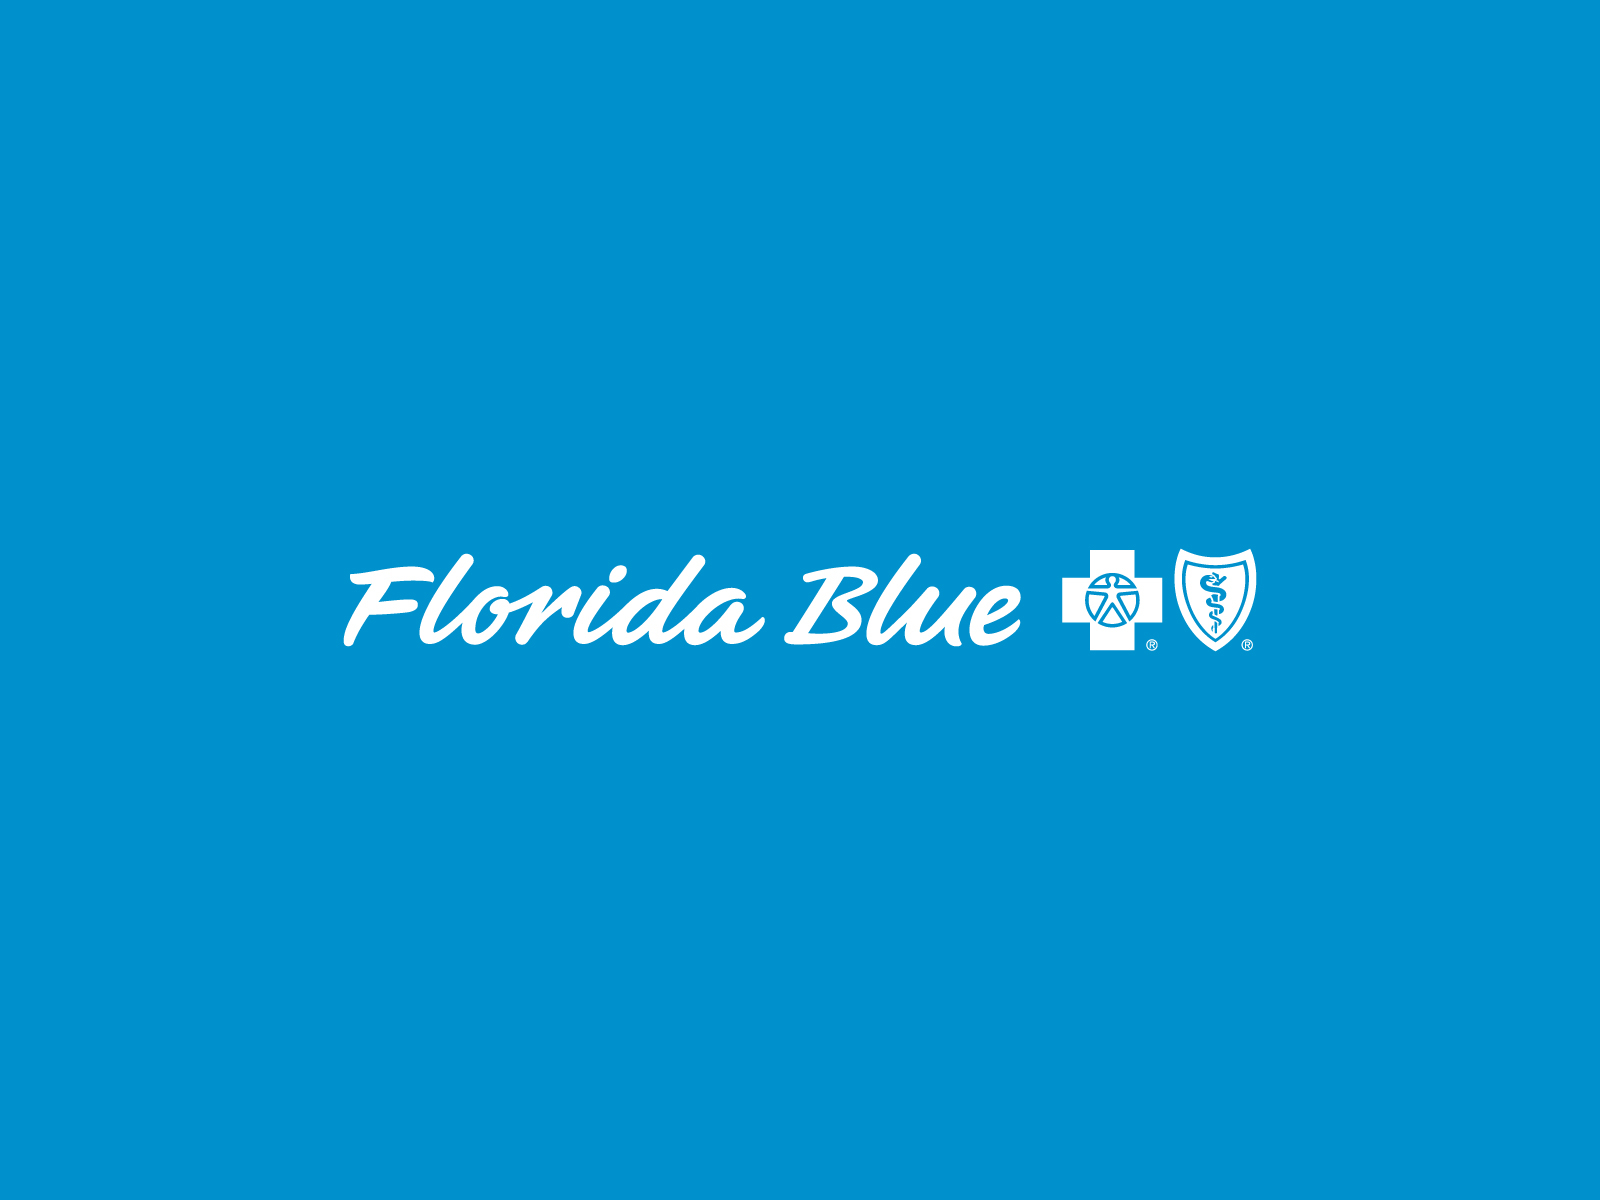 Florida Blue logo on a blue background